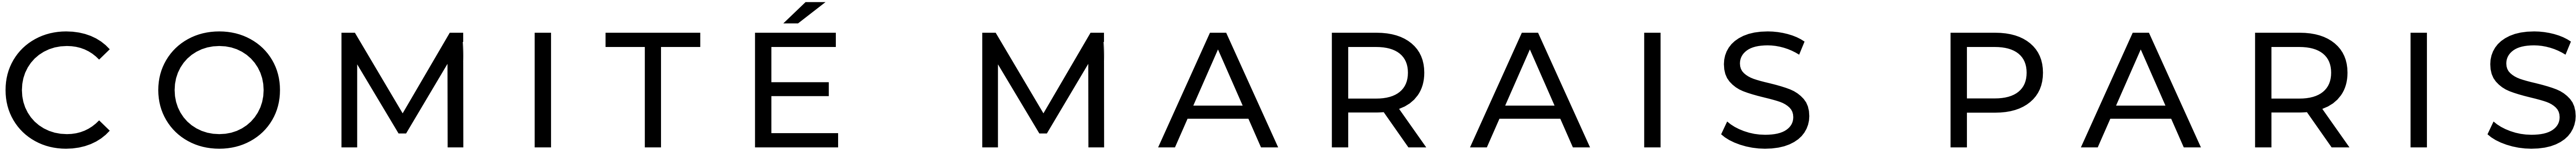 logo capucine CMP simple noir